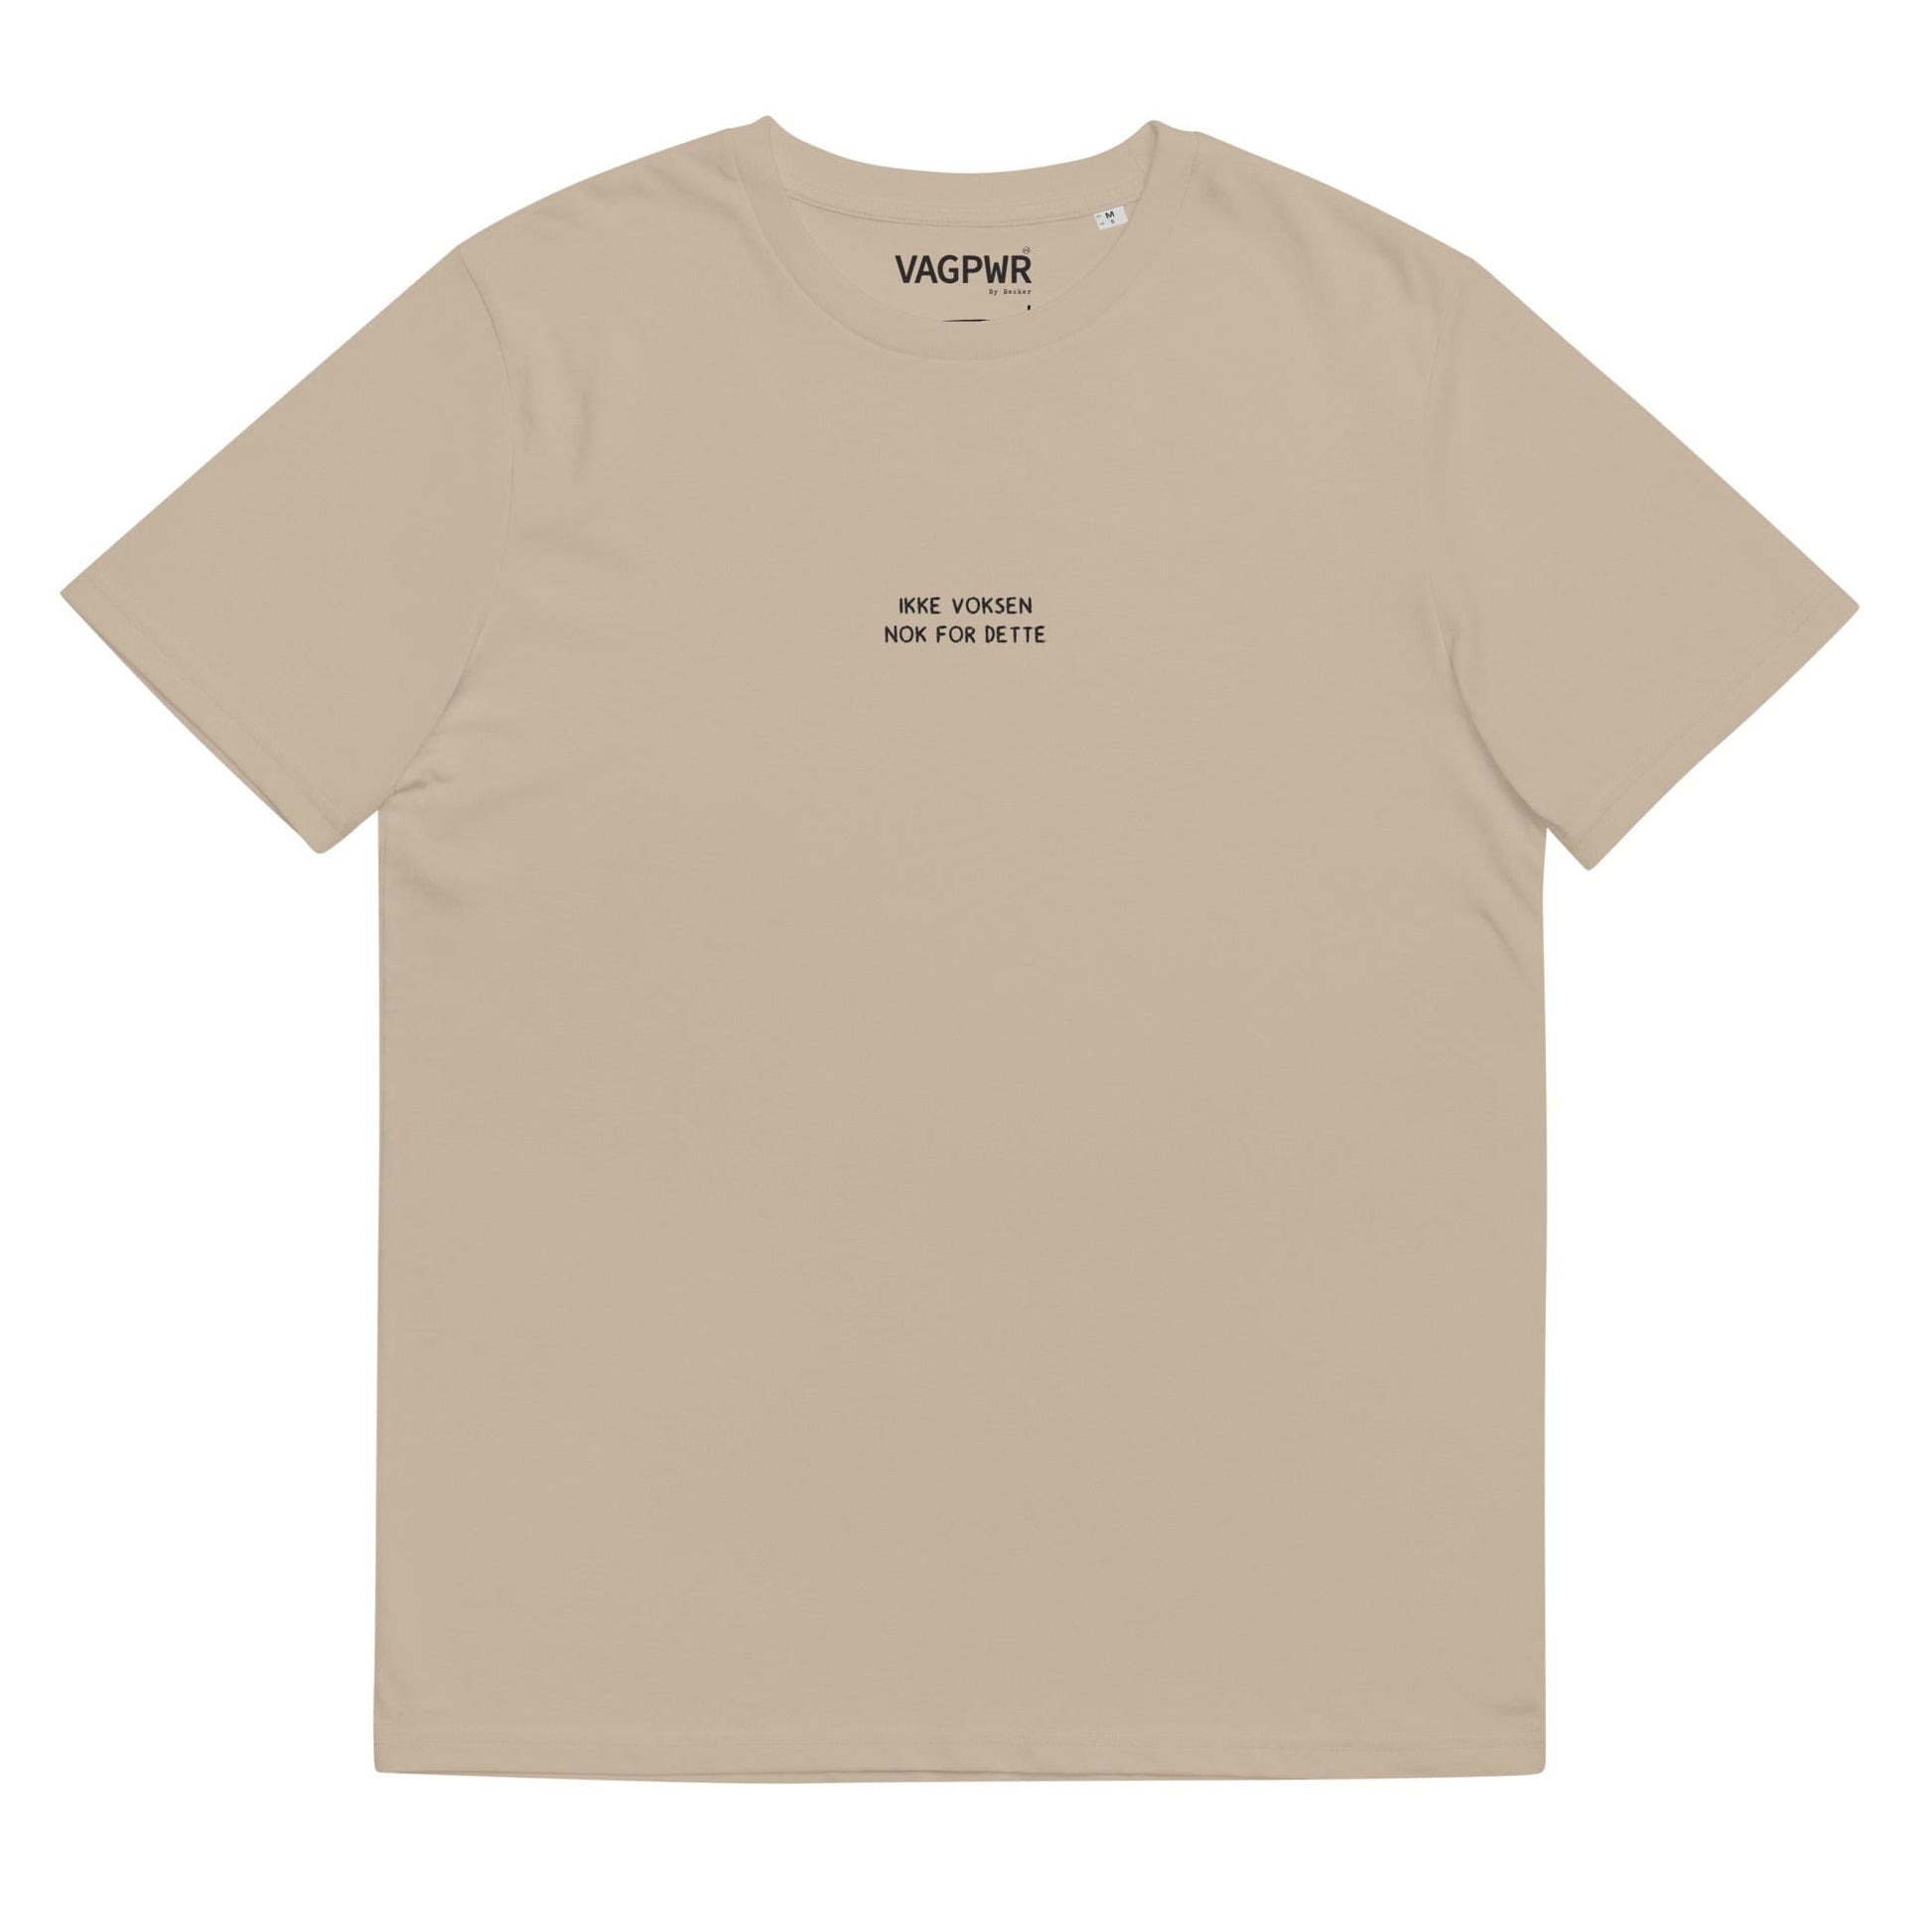 VAGPWR Desert Dust / S Ikke voksen black text - Unisex organic cotton t-shirt